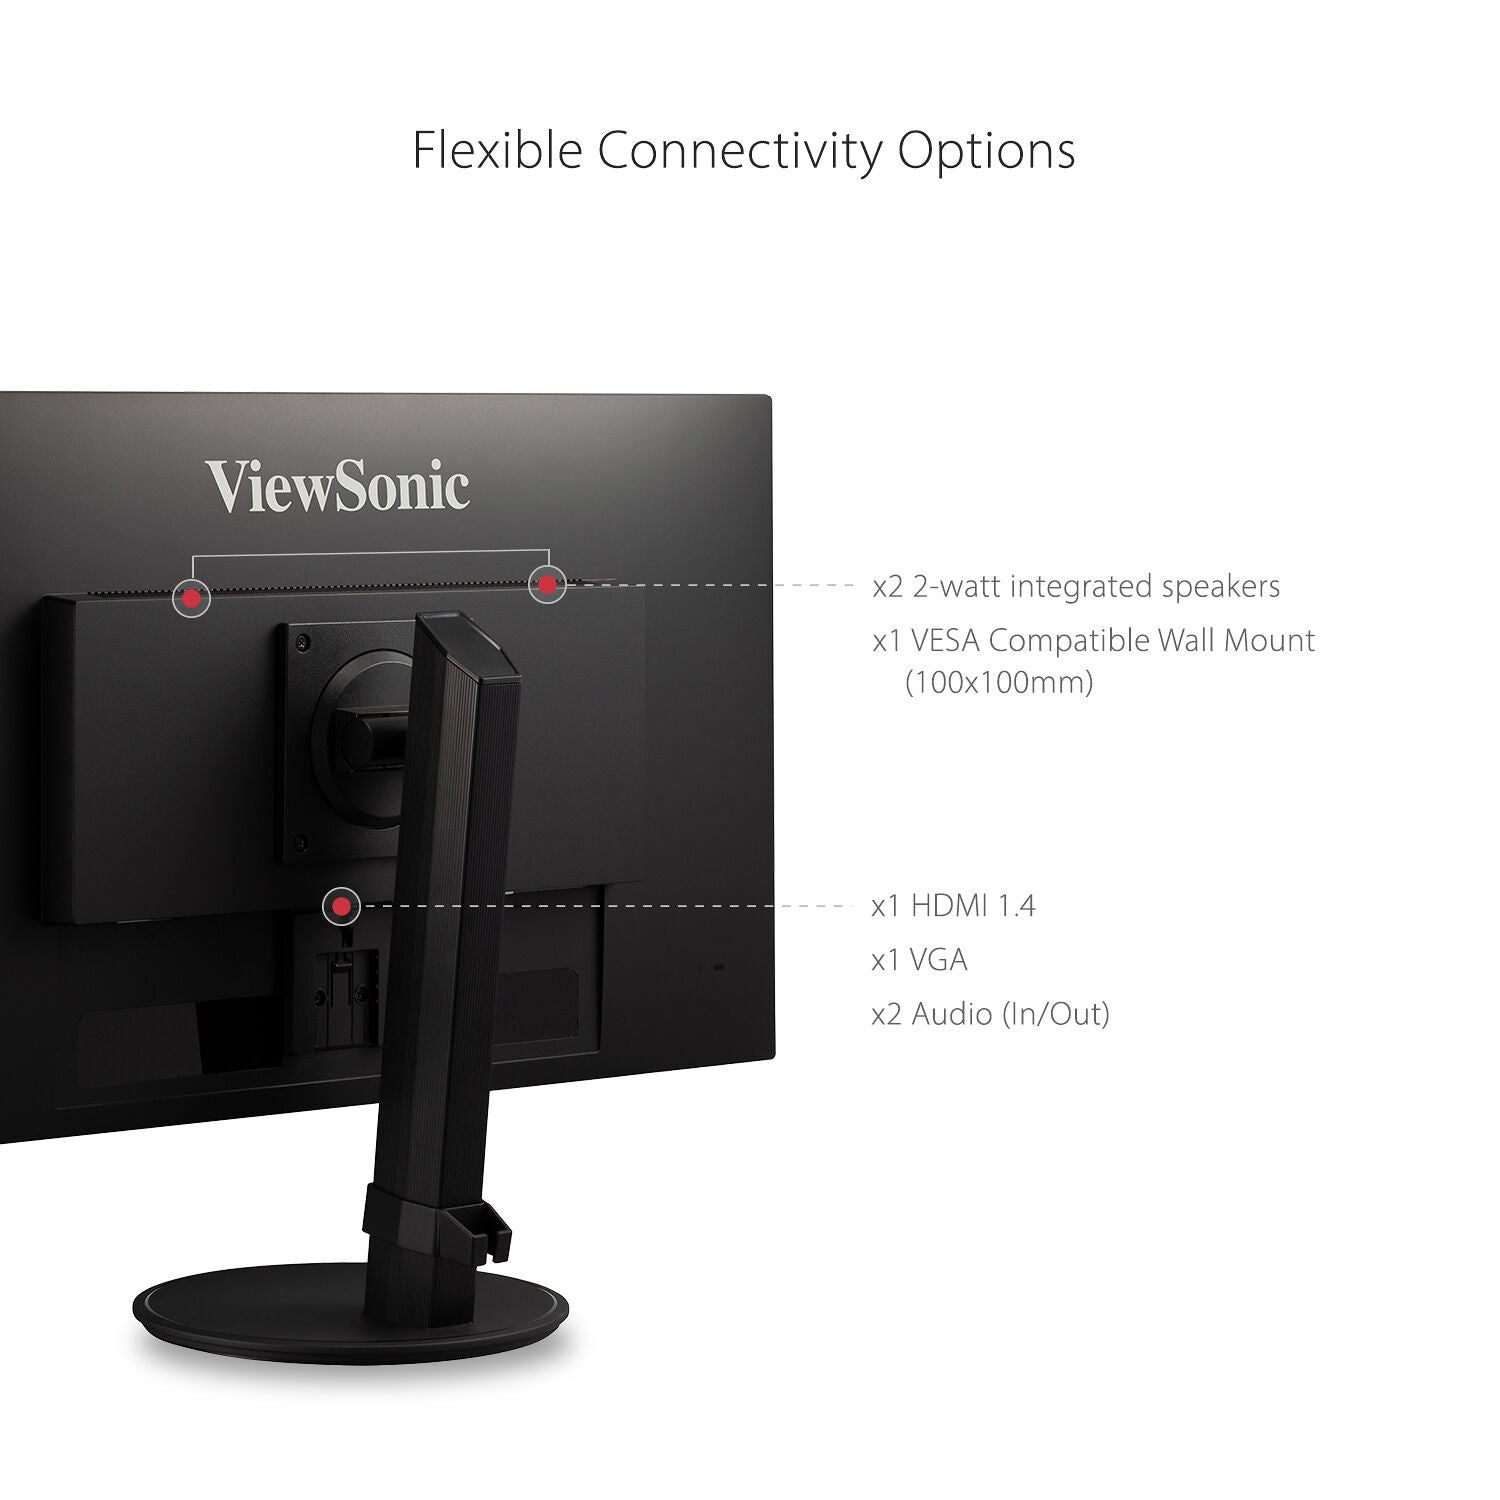 ViewSonic VA2447-MHJ-R 24" Full HD 1080p Adaptive-Sync MVA Monitor - Certified Refurbished